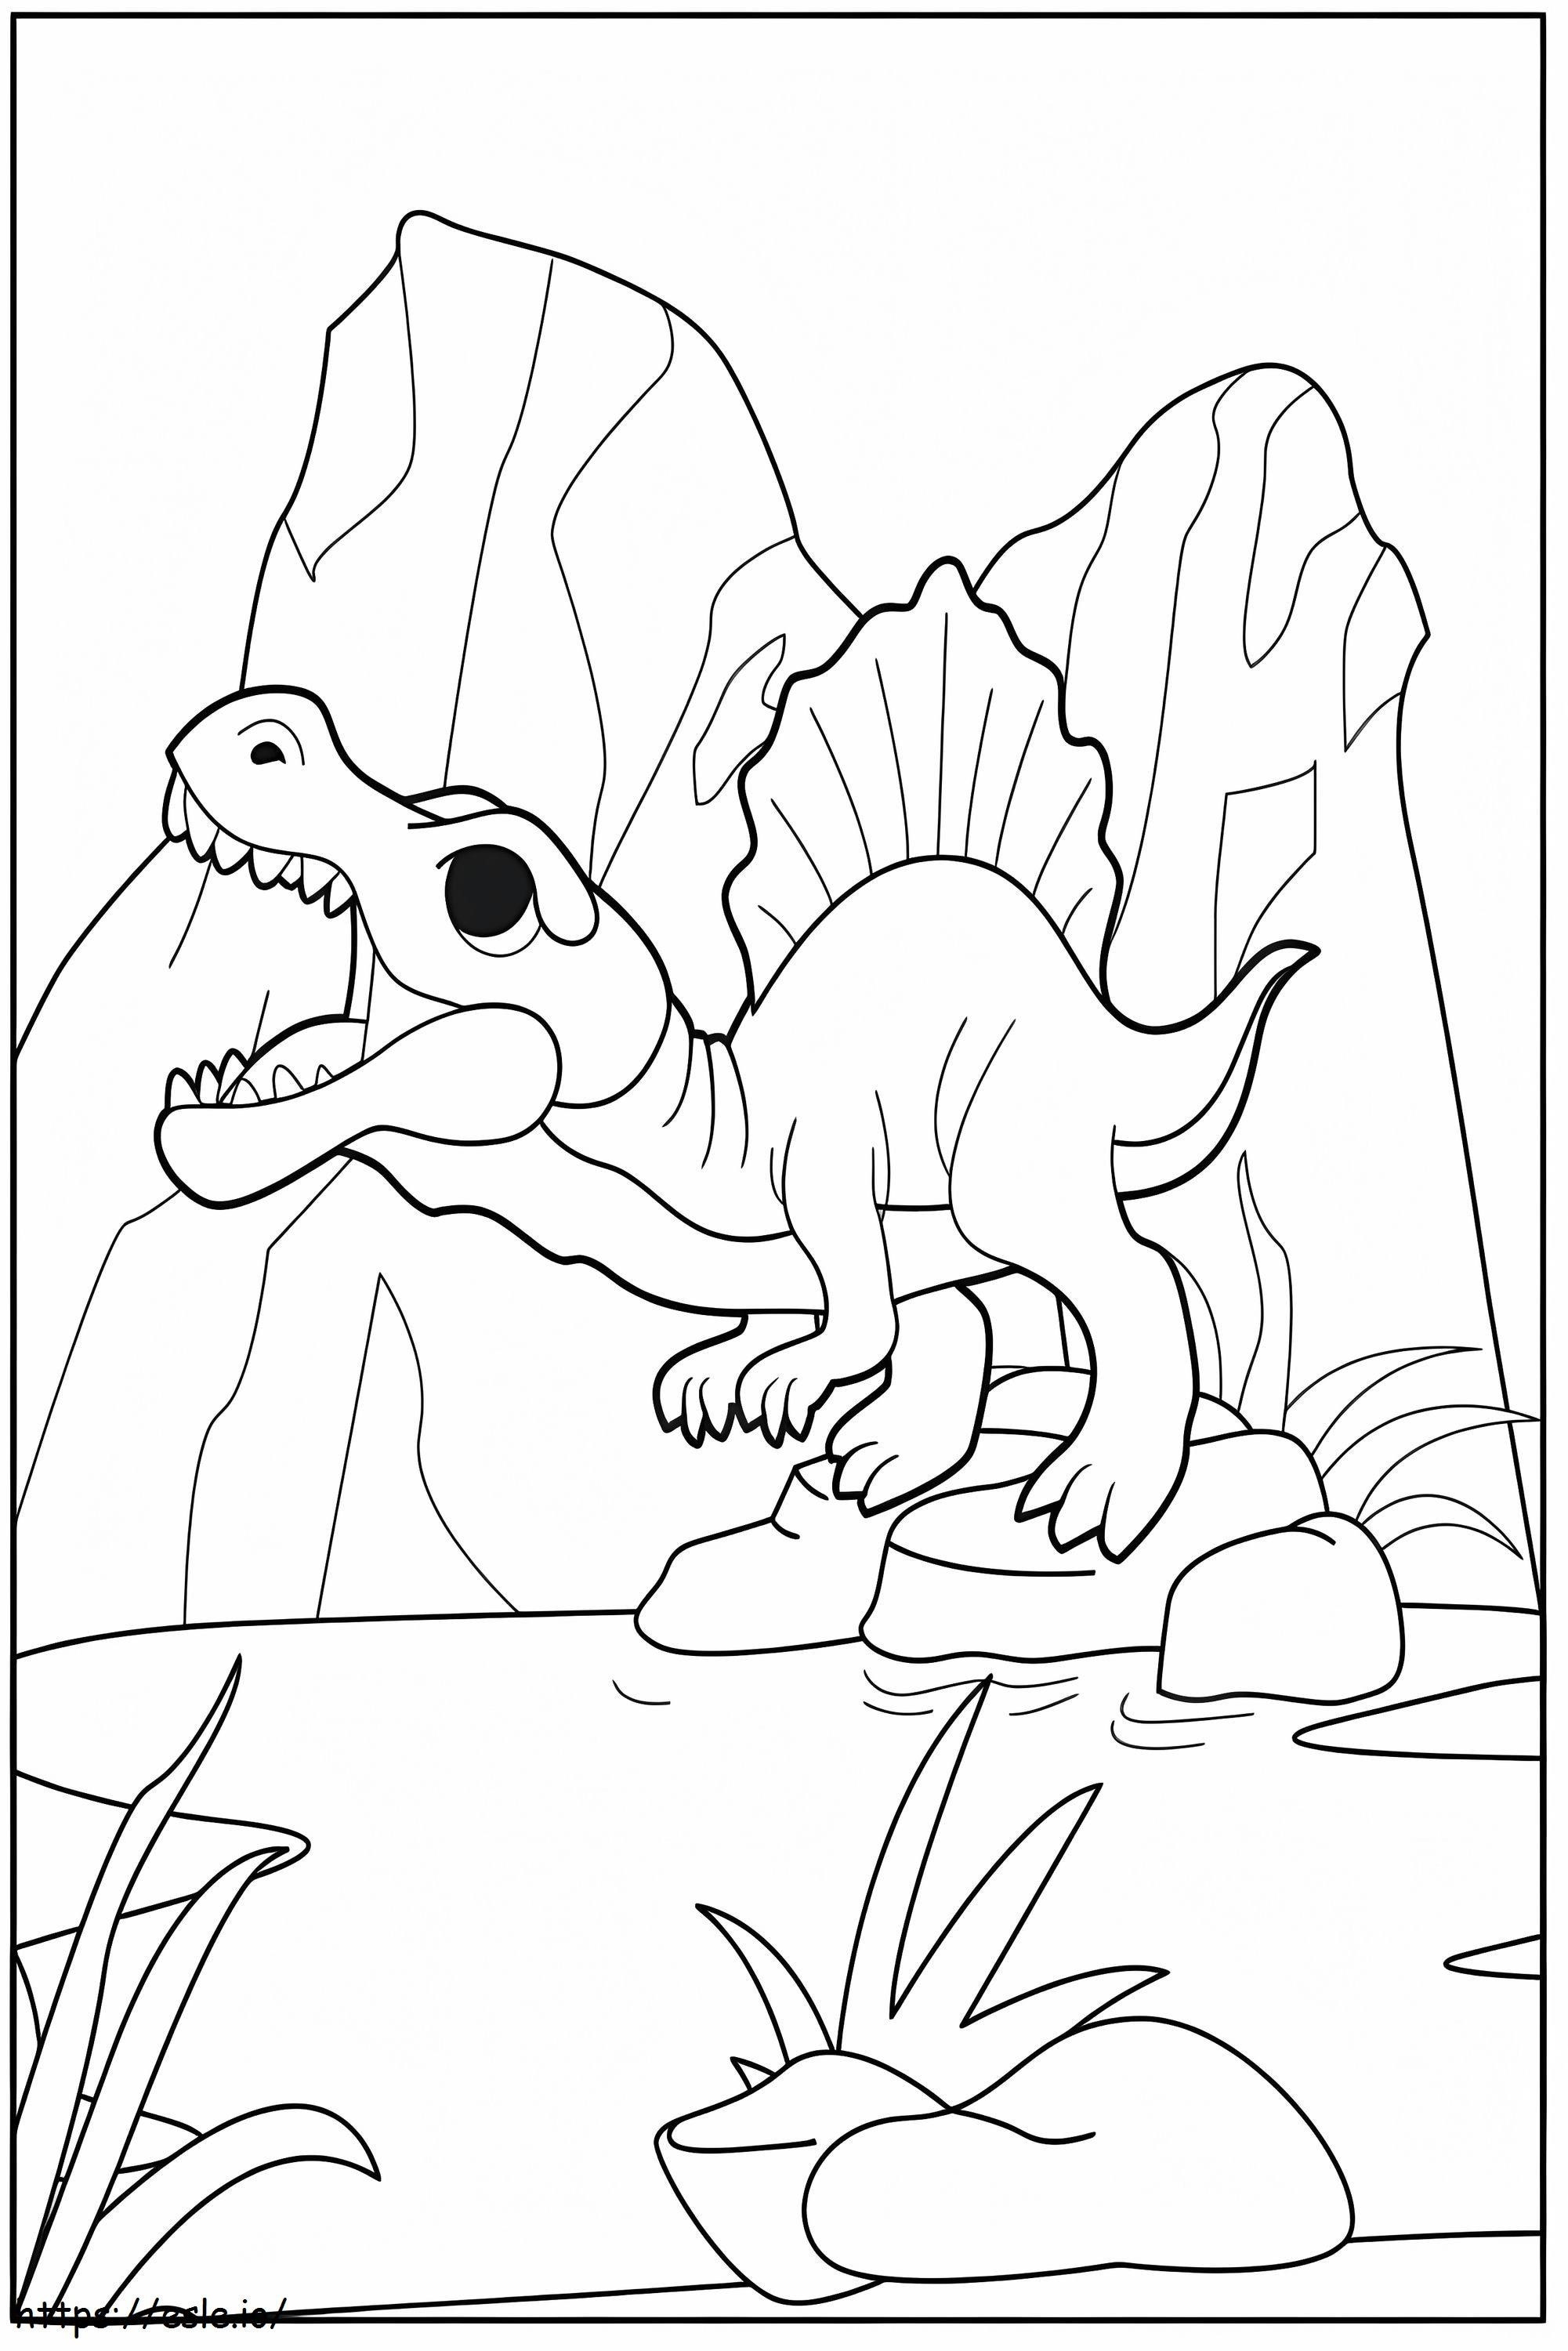 Imádnivaló Spinosaurus kifestő